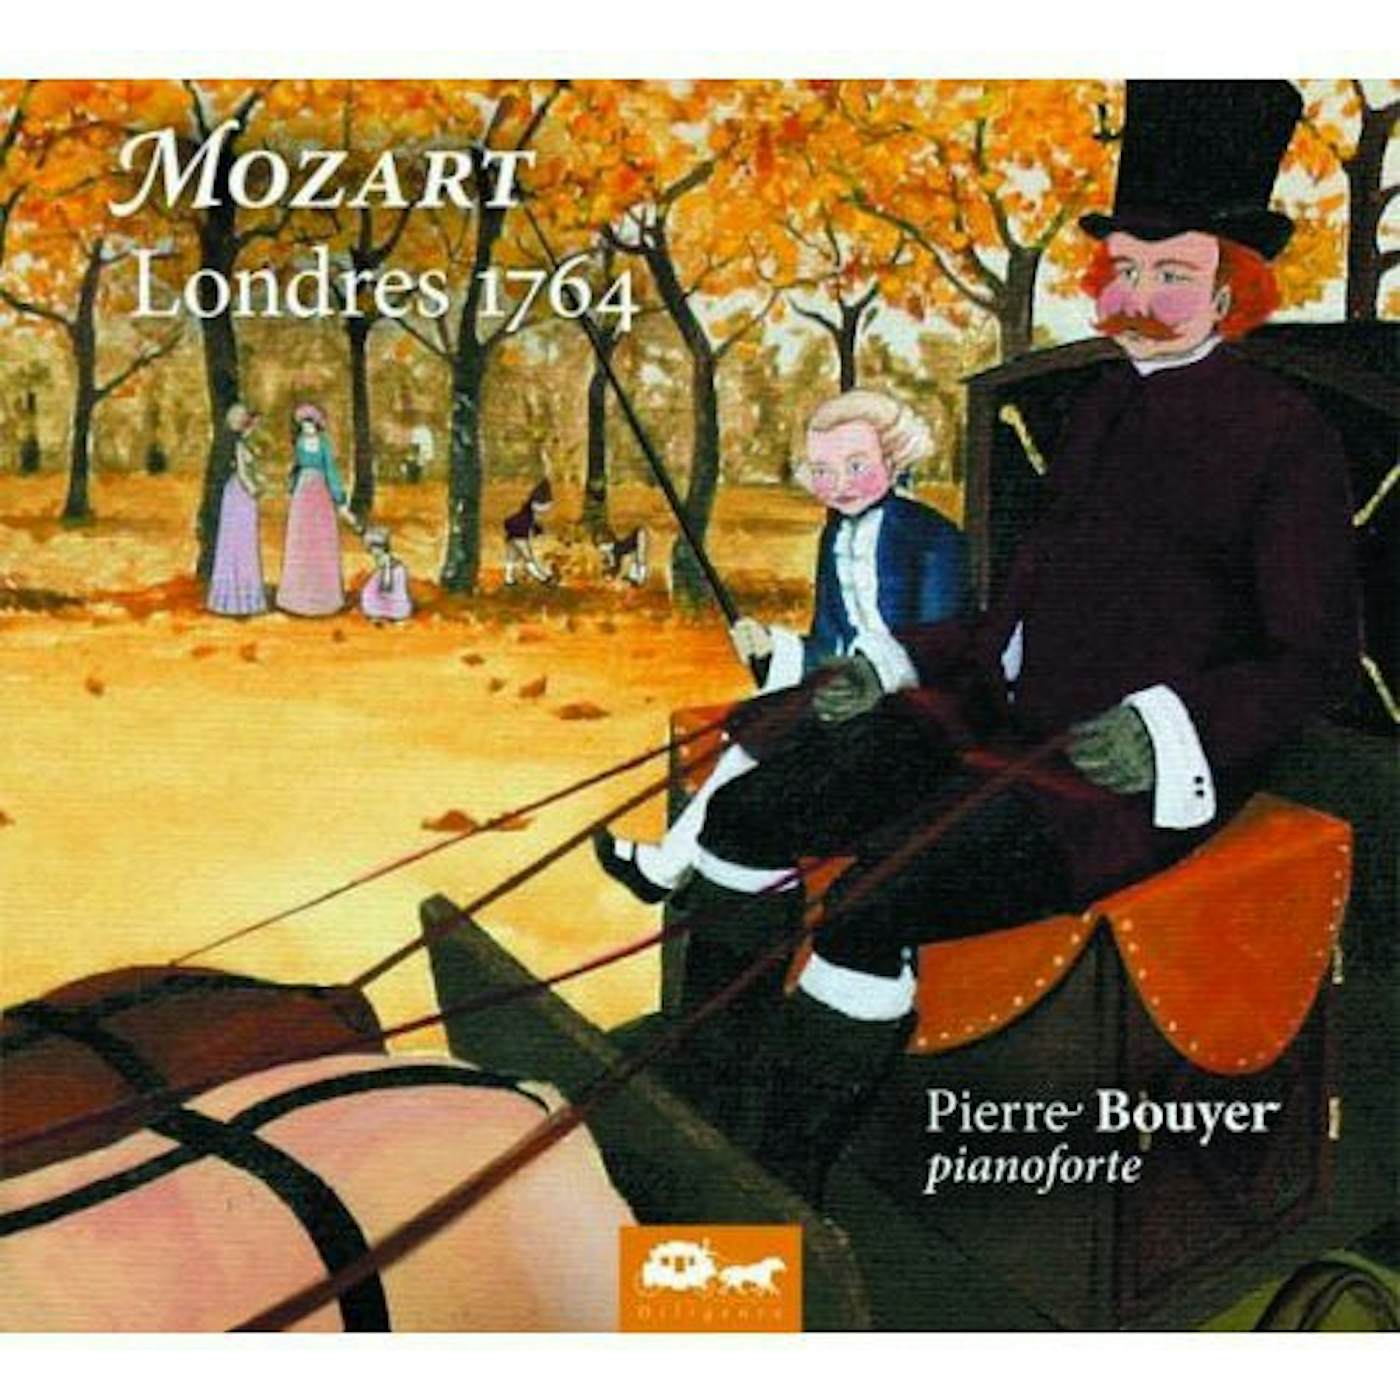 W.A. Mozart LONDRES 1764 CD